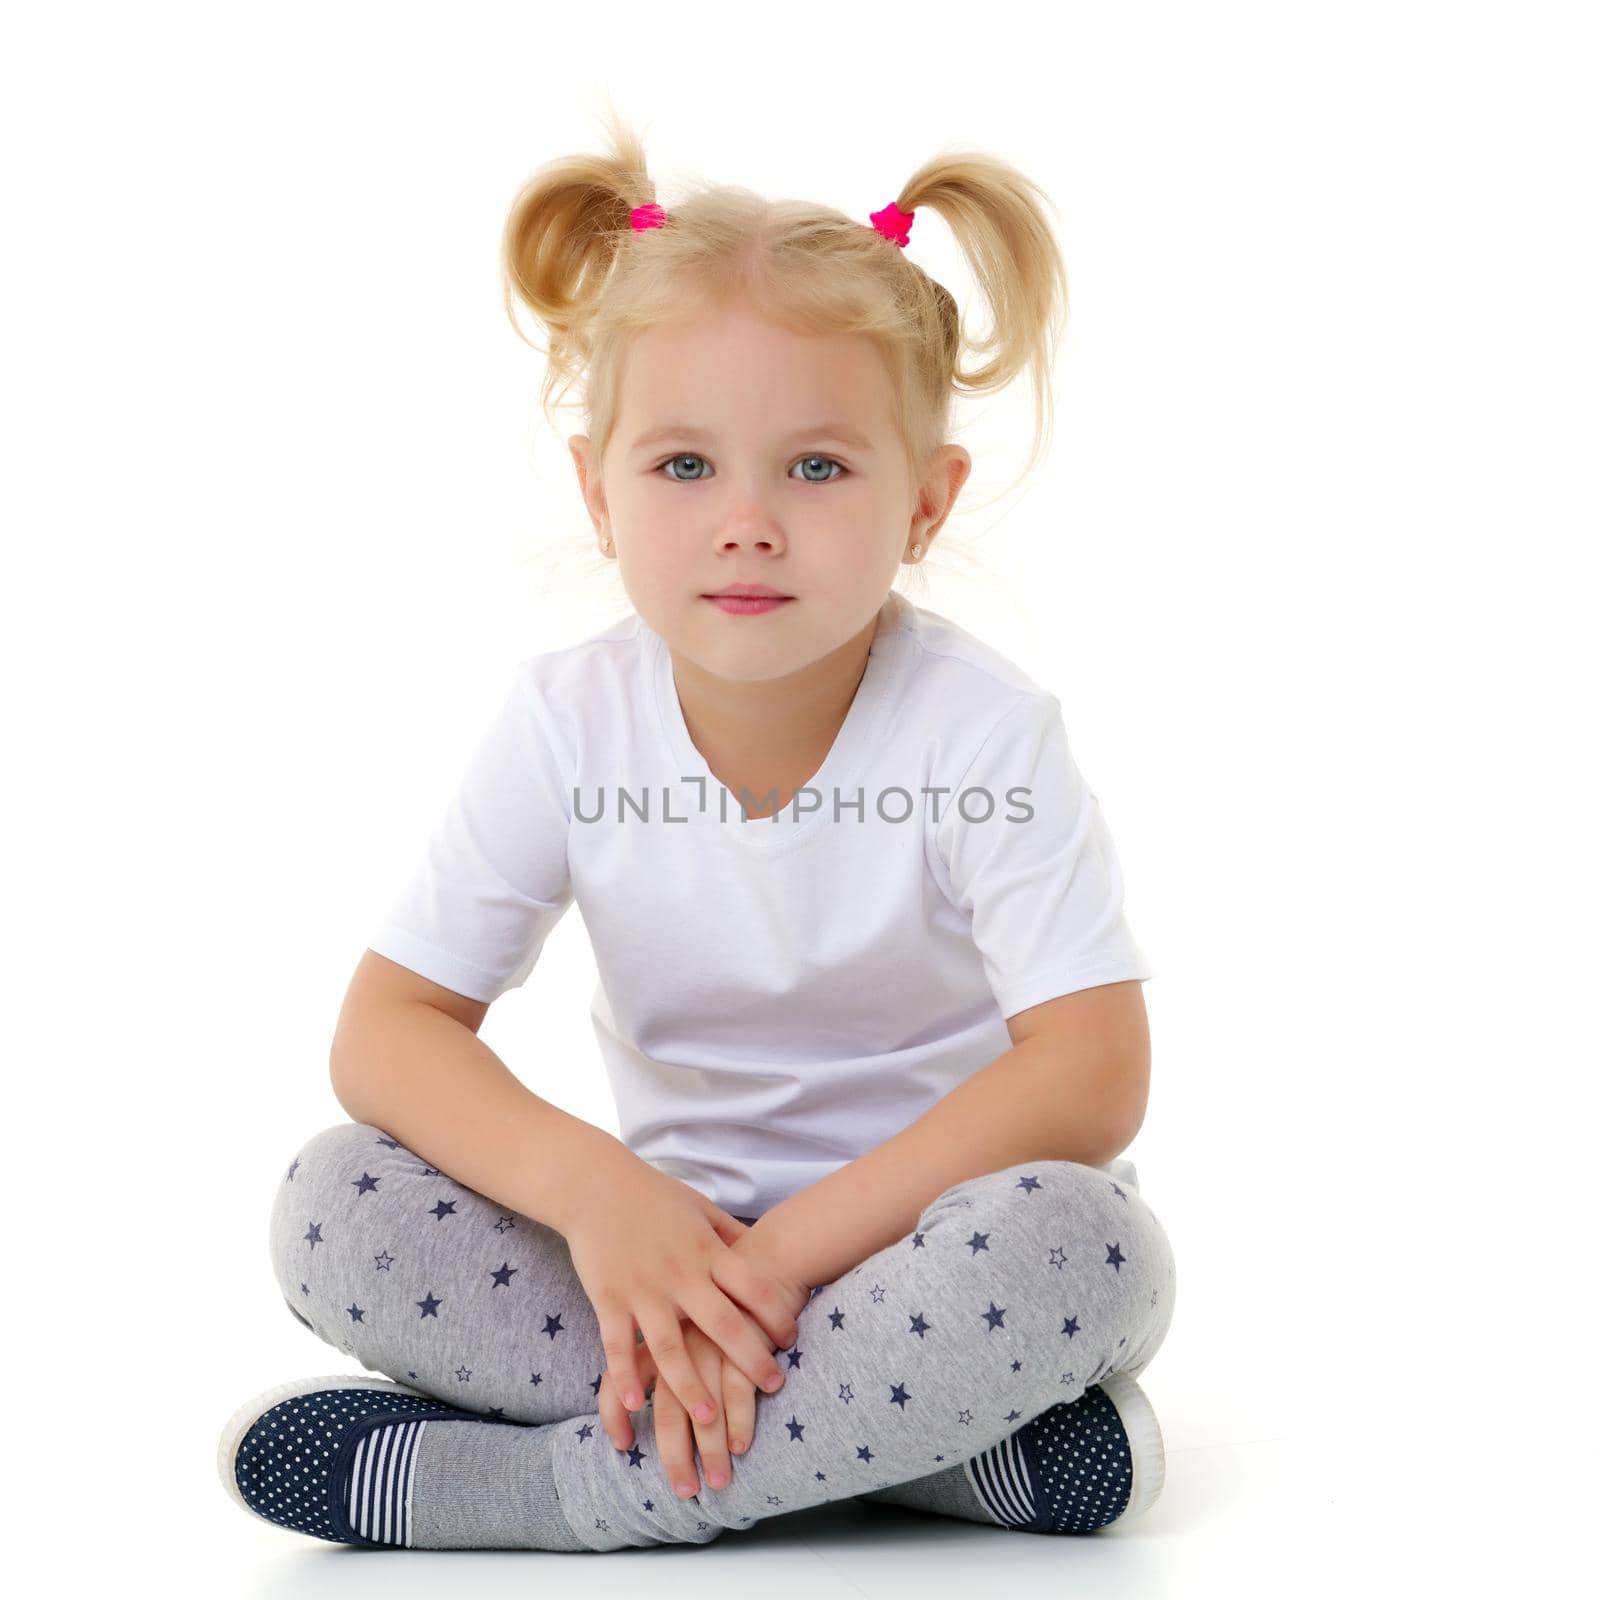 A little girl in a pure white T-shirt. by kolesnikov_studio